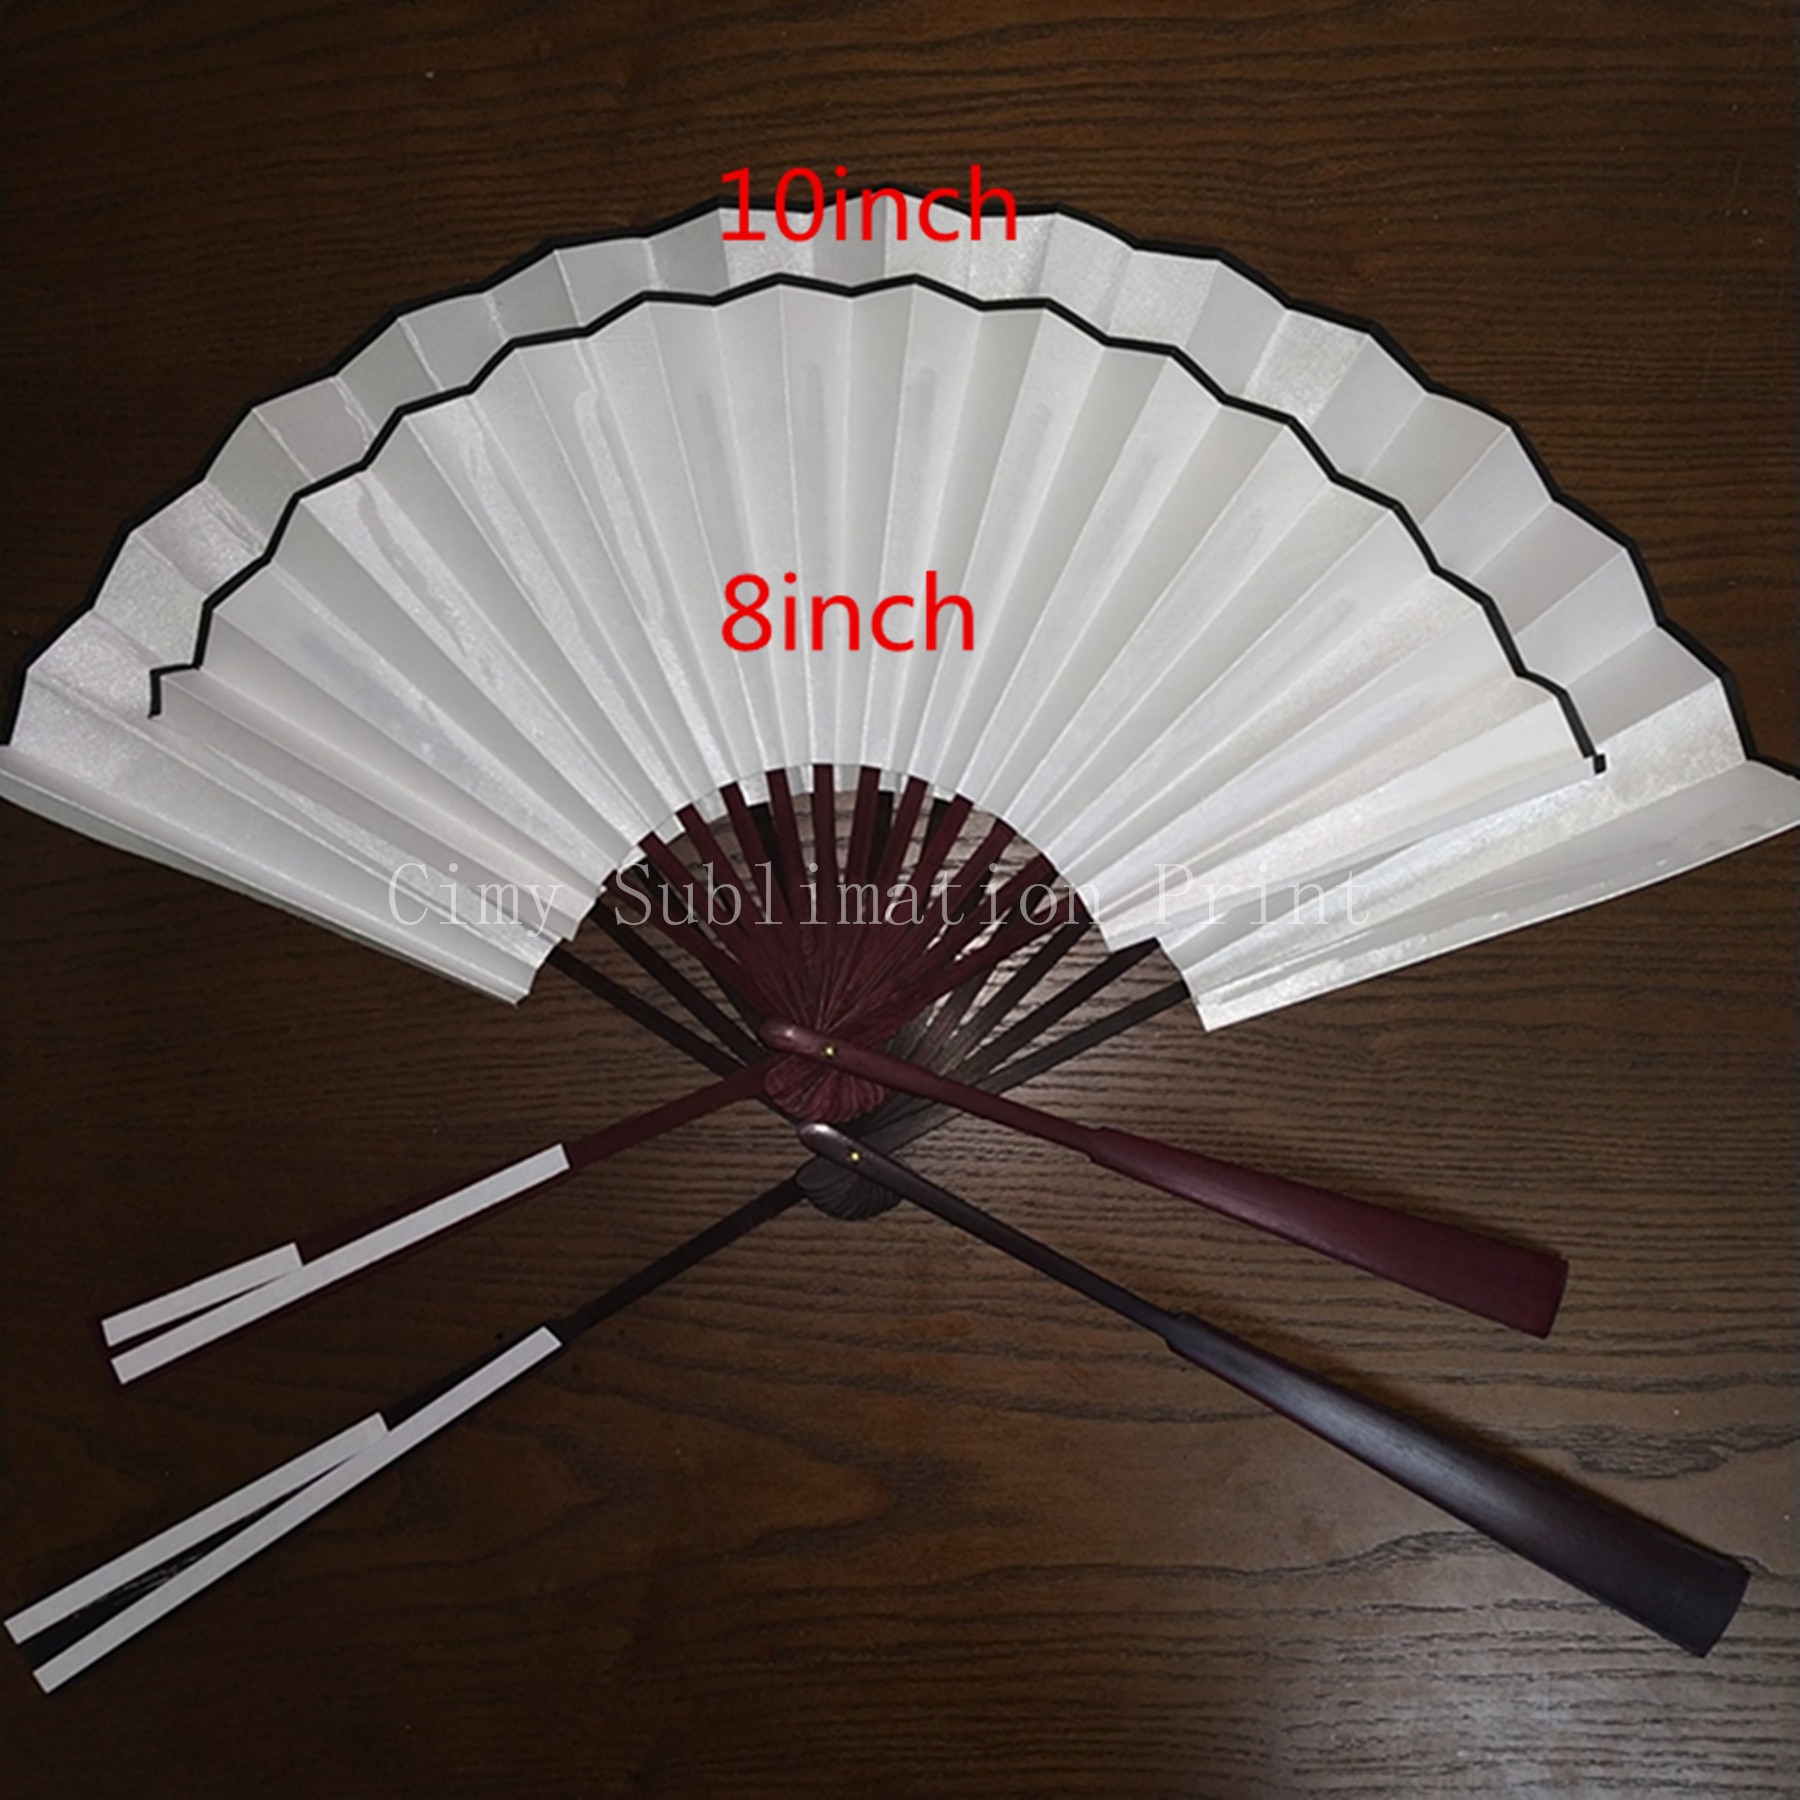 10 teile/los 8 zoll/10 zoll leer Sublimation Seide Fan Für Sublimation TINTE Drucken DIY Wärme Drücken Druck Transfer